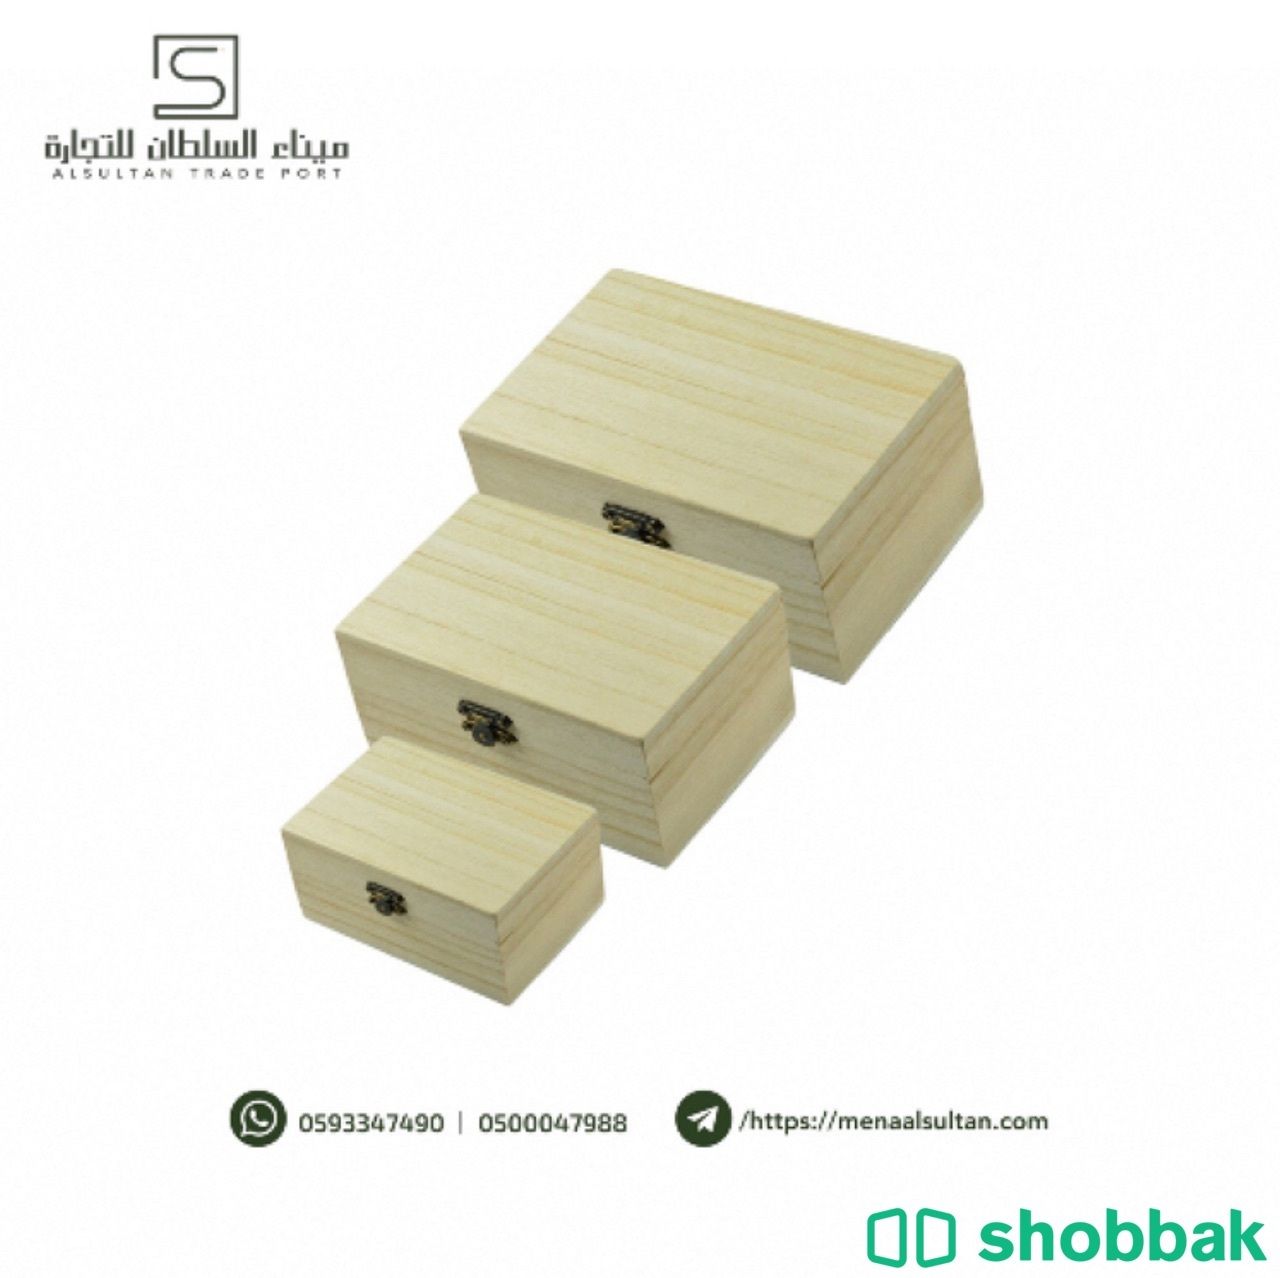 طقم صندوق خشب 3 قطع Shobbak Saudi Arabia